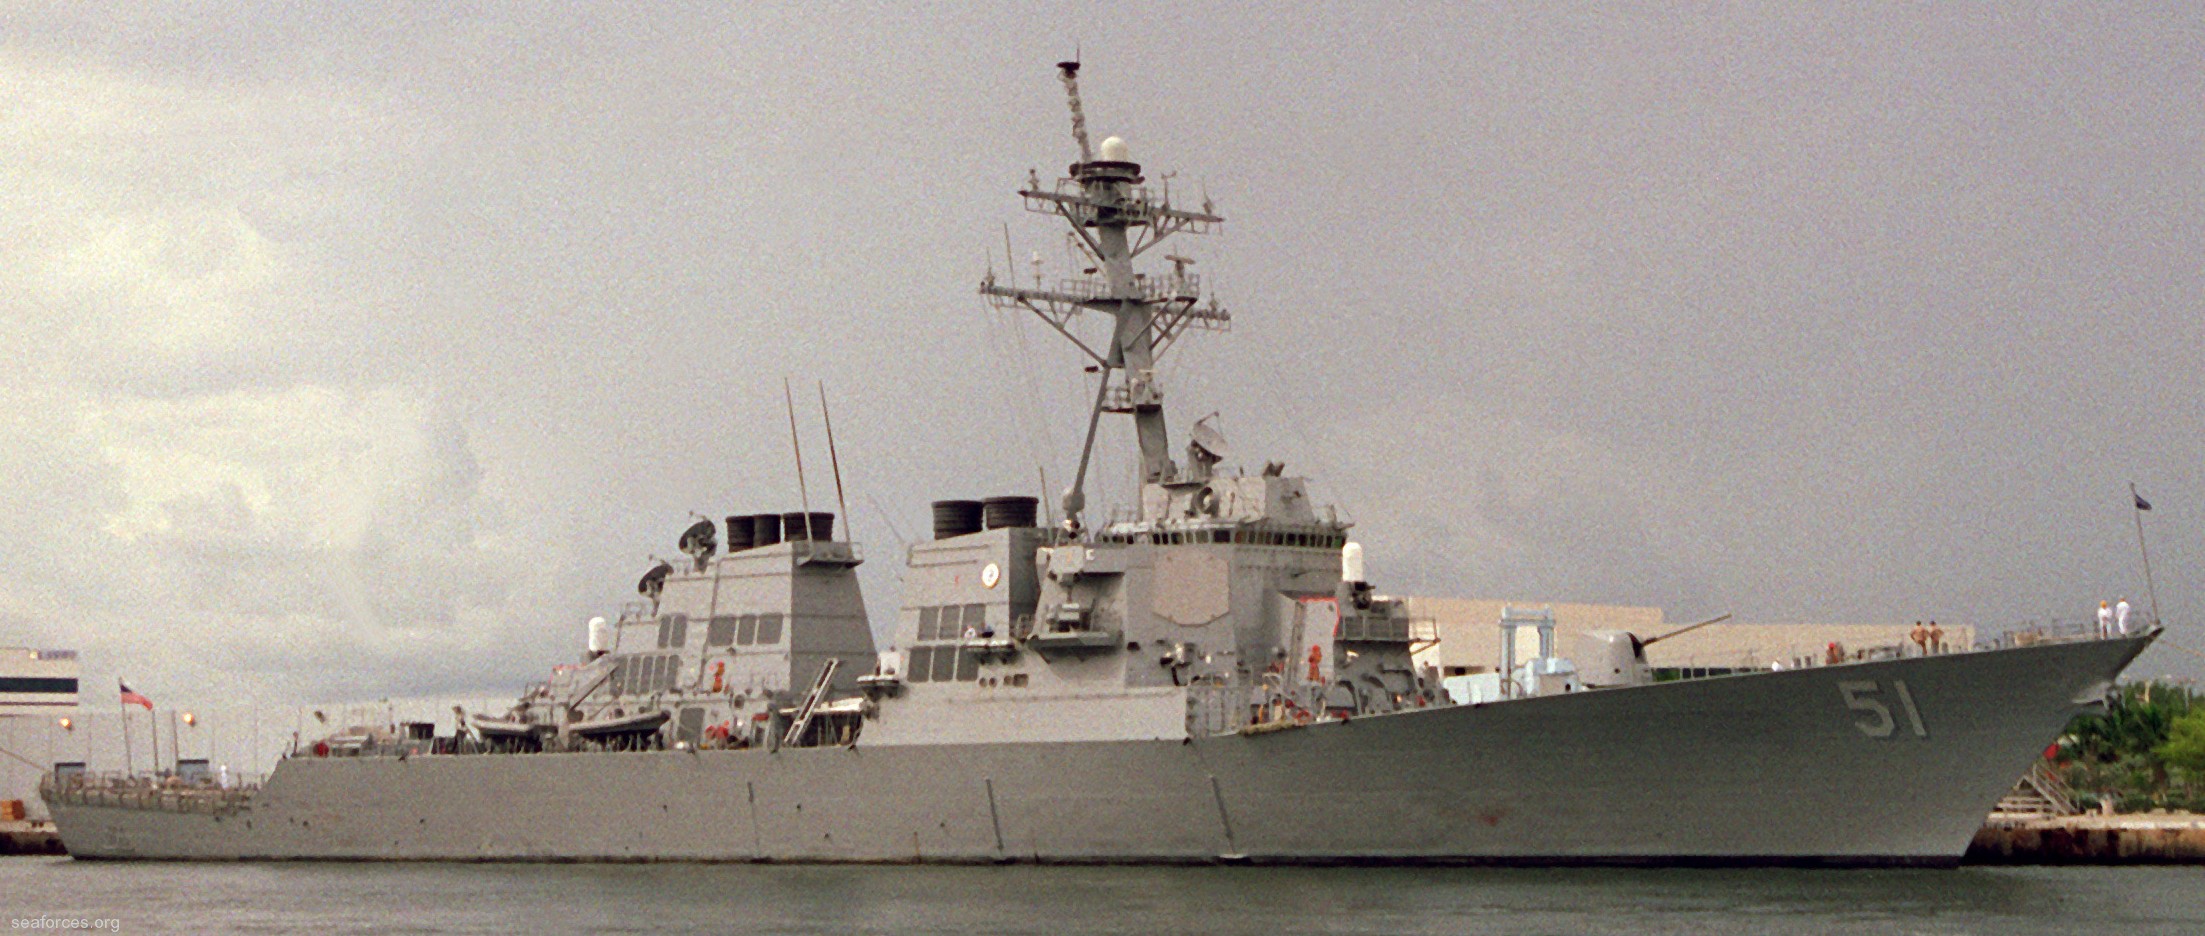 ddg-51 uss arleigh burke destroyer us navy 68 port everglades florida